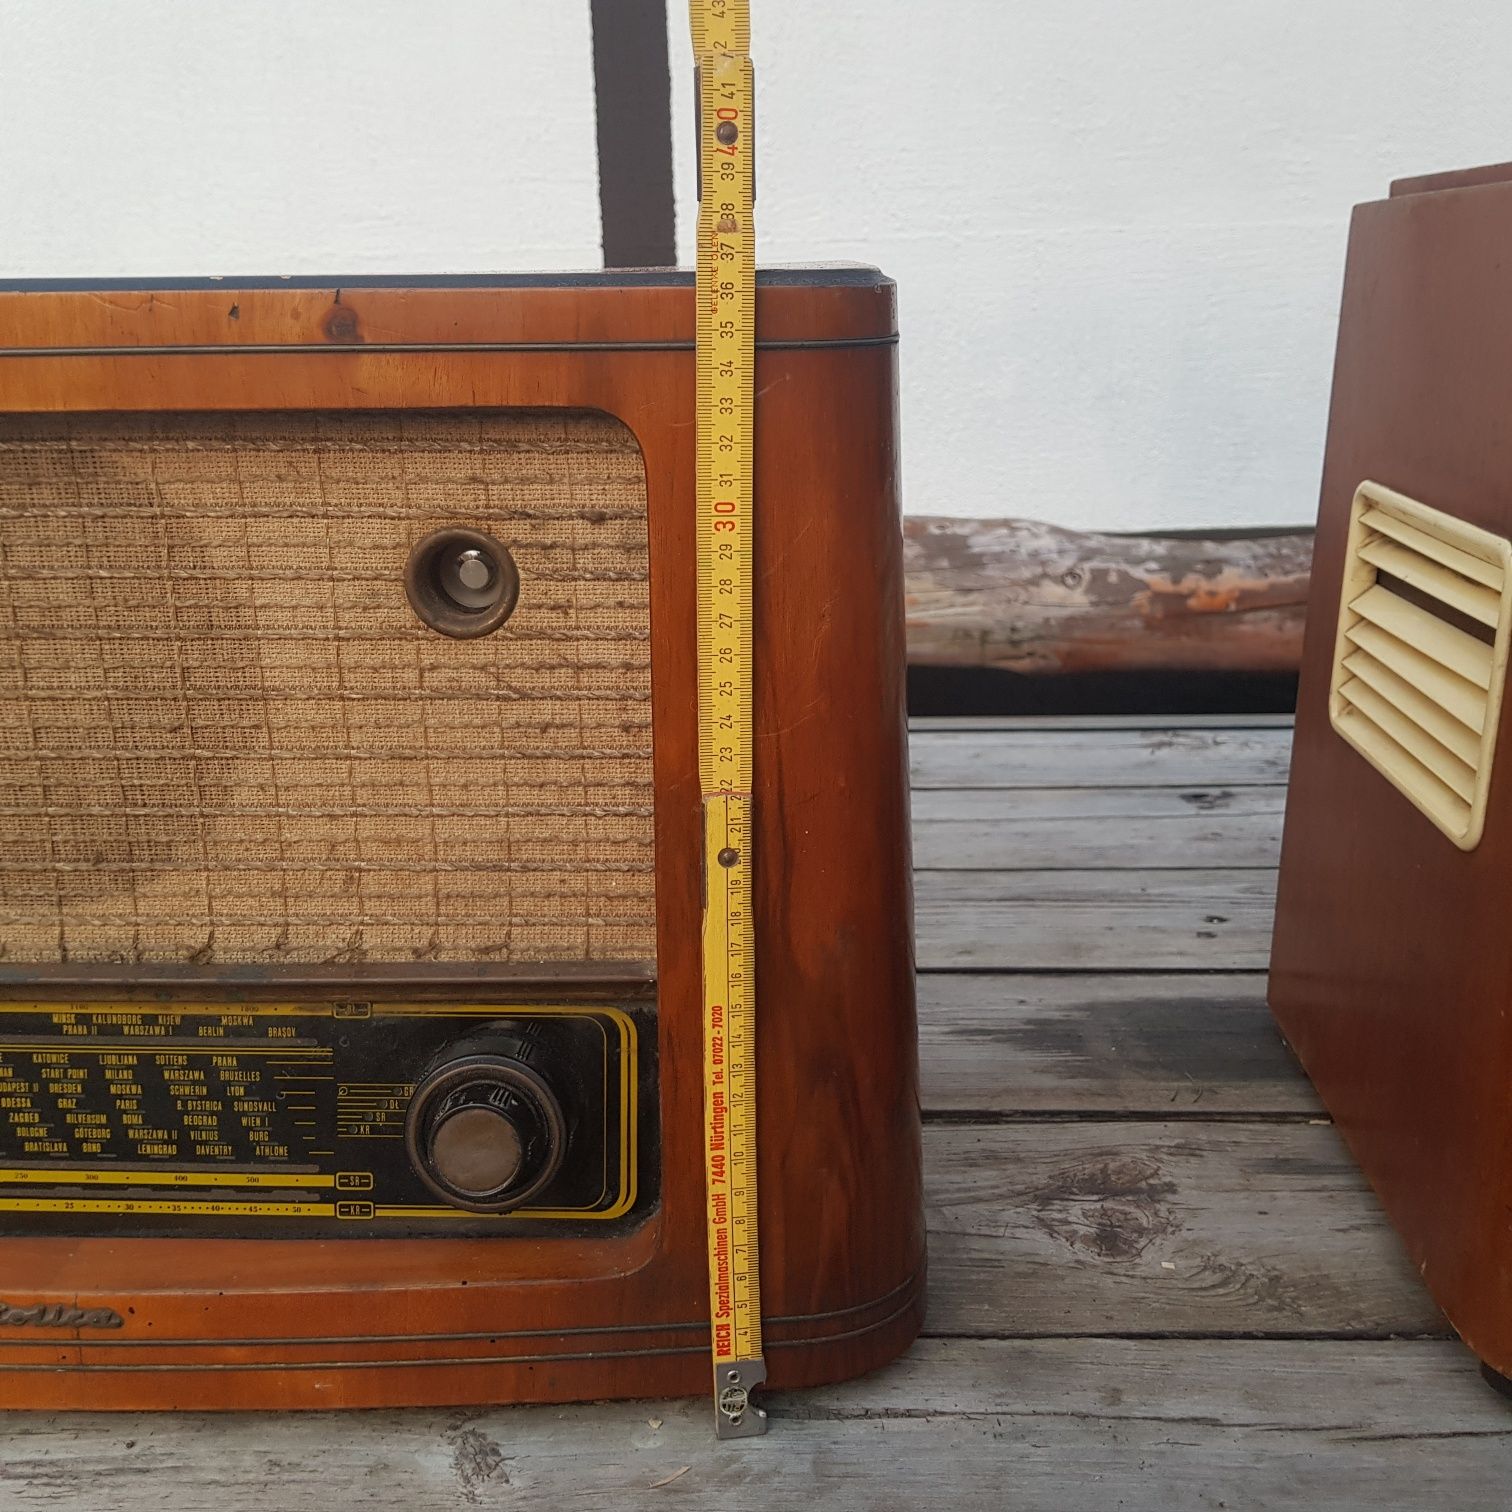 Stare radio, lampowe